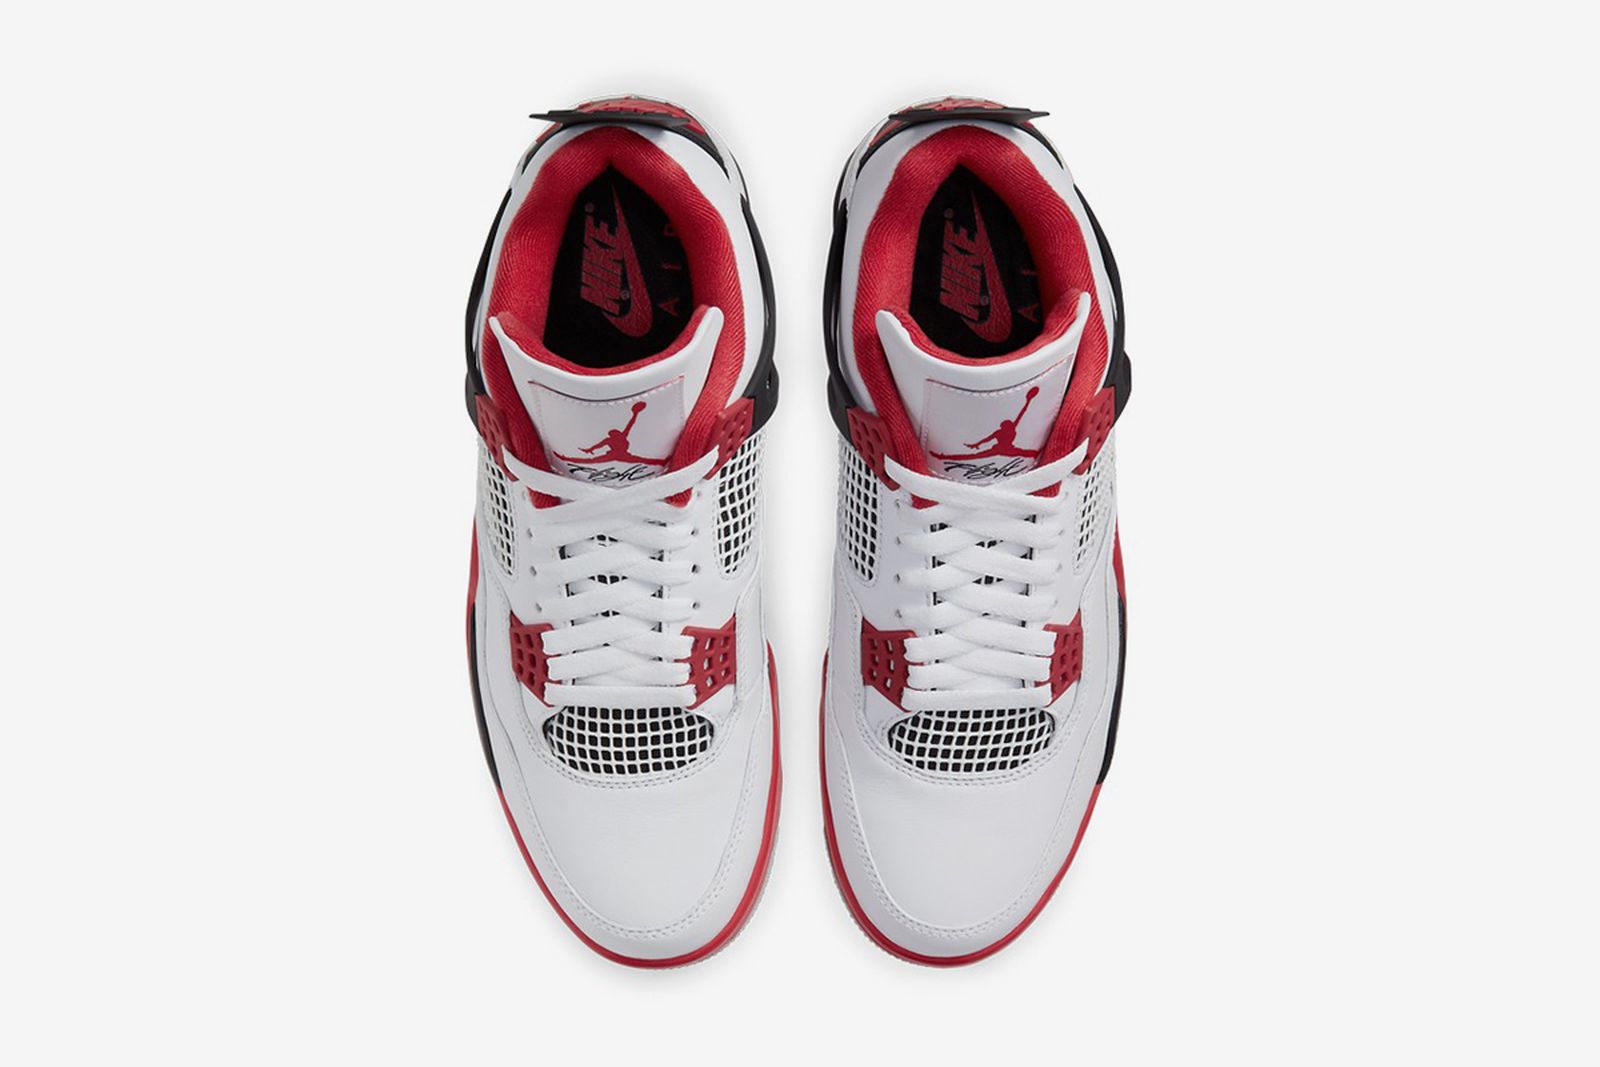 Nike fire red jordan 4 Air Jordan 4 “Fire Red”: Images & Where to Buy This Week